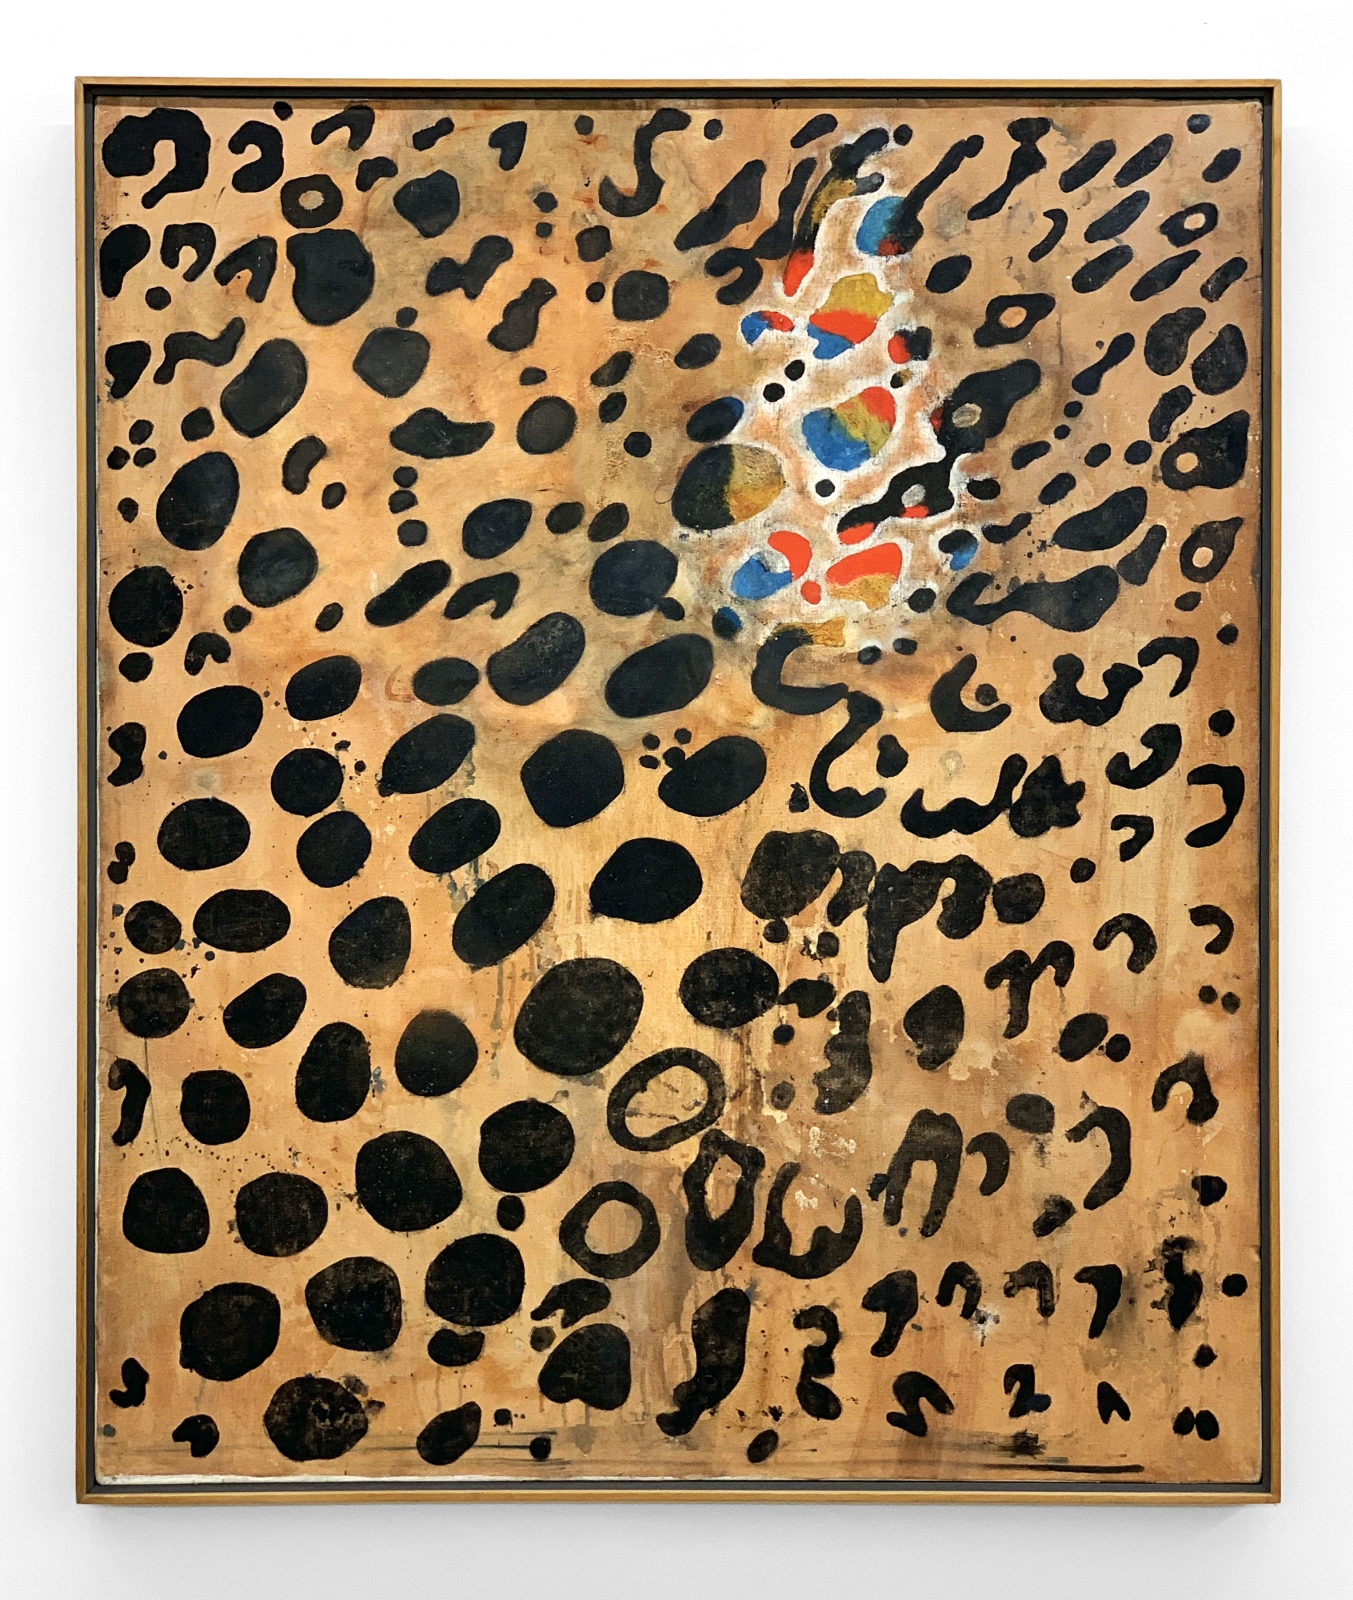 Prunella Clough
Natural History, 1988
oil on canvas
44 1/2 x 37 1/8 ins.
113 x 94 cm